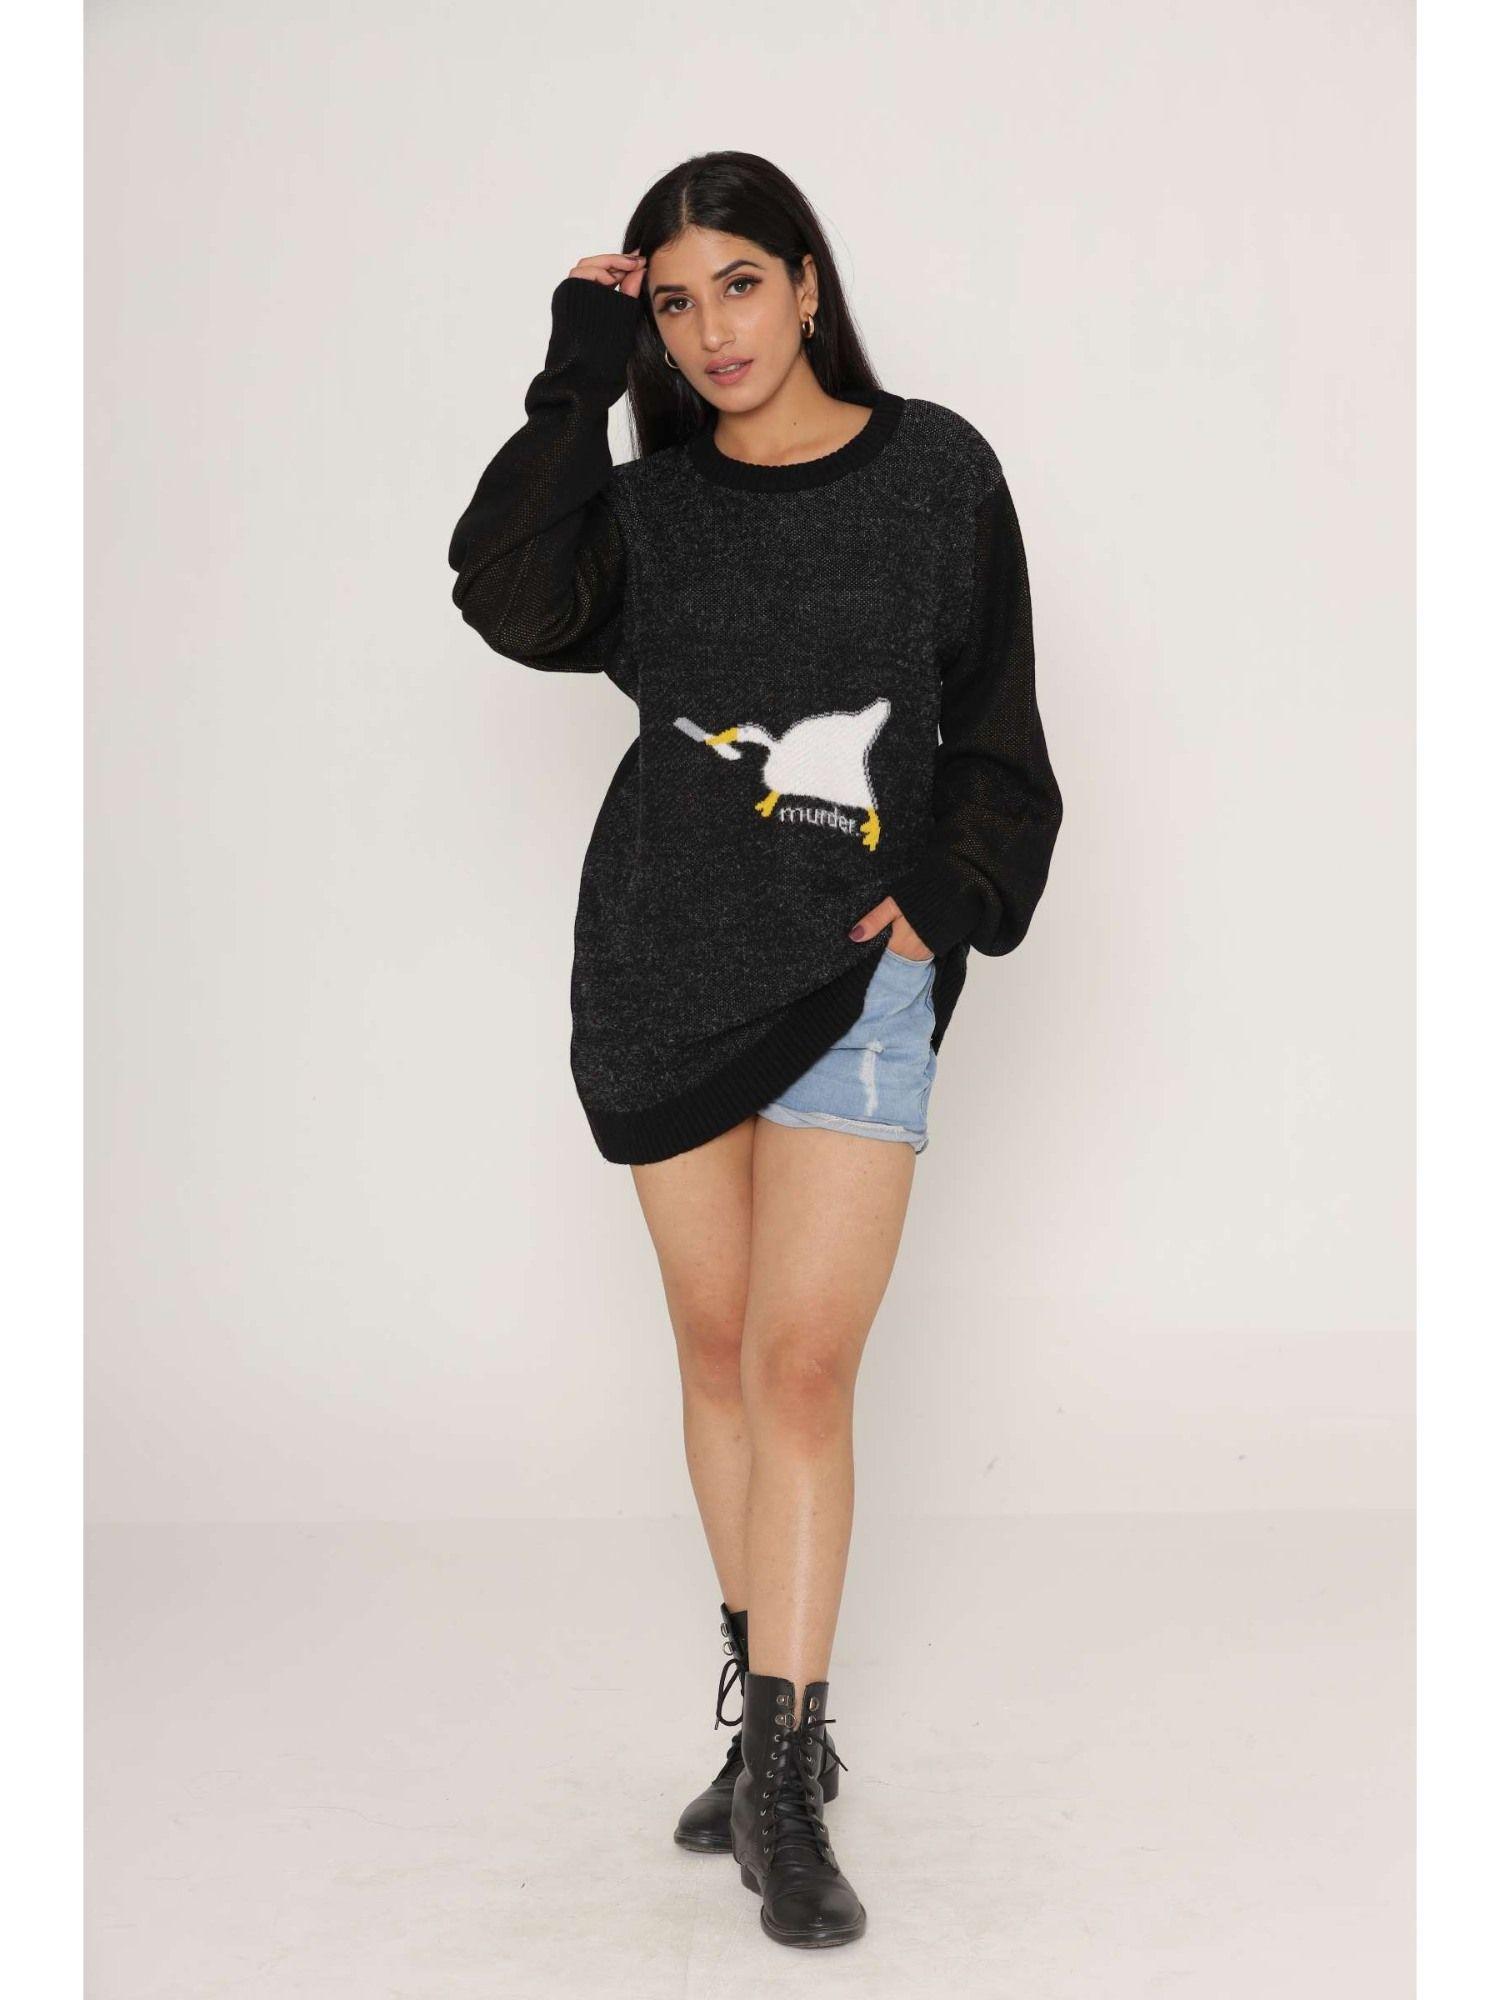 stylish oversized black printed sweater dress for women